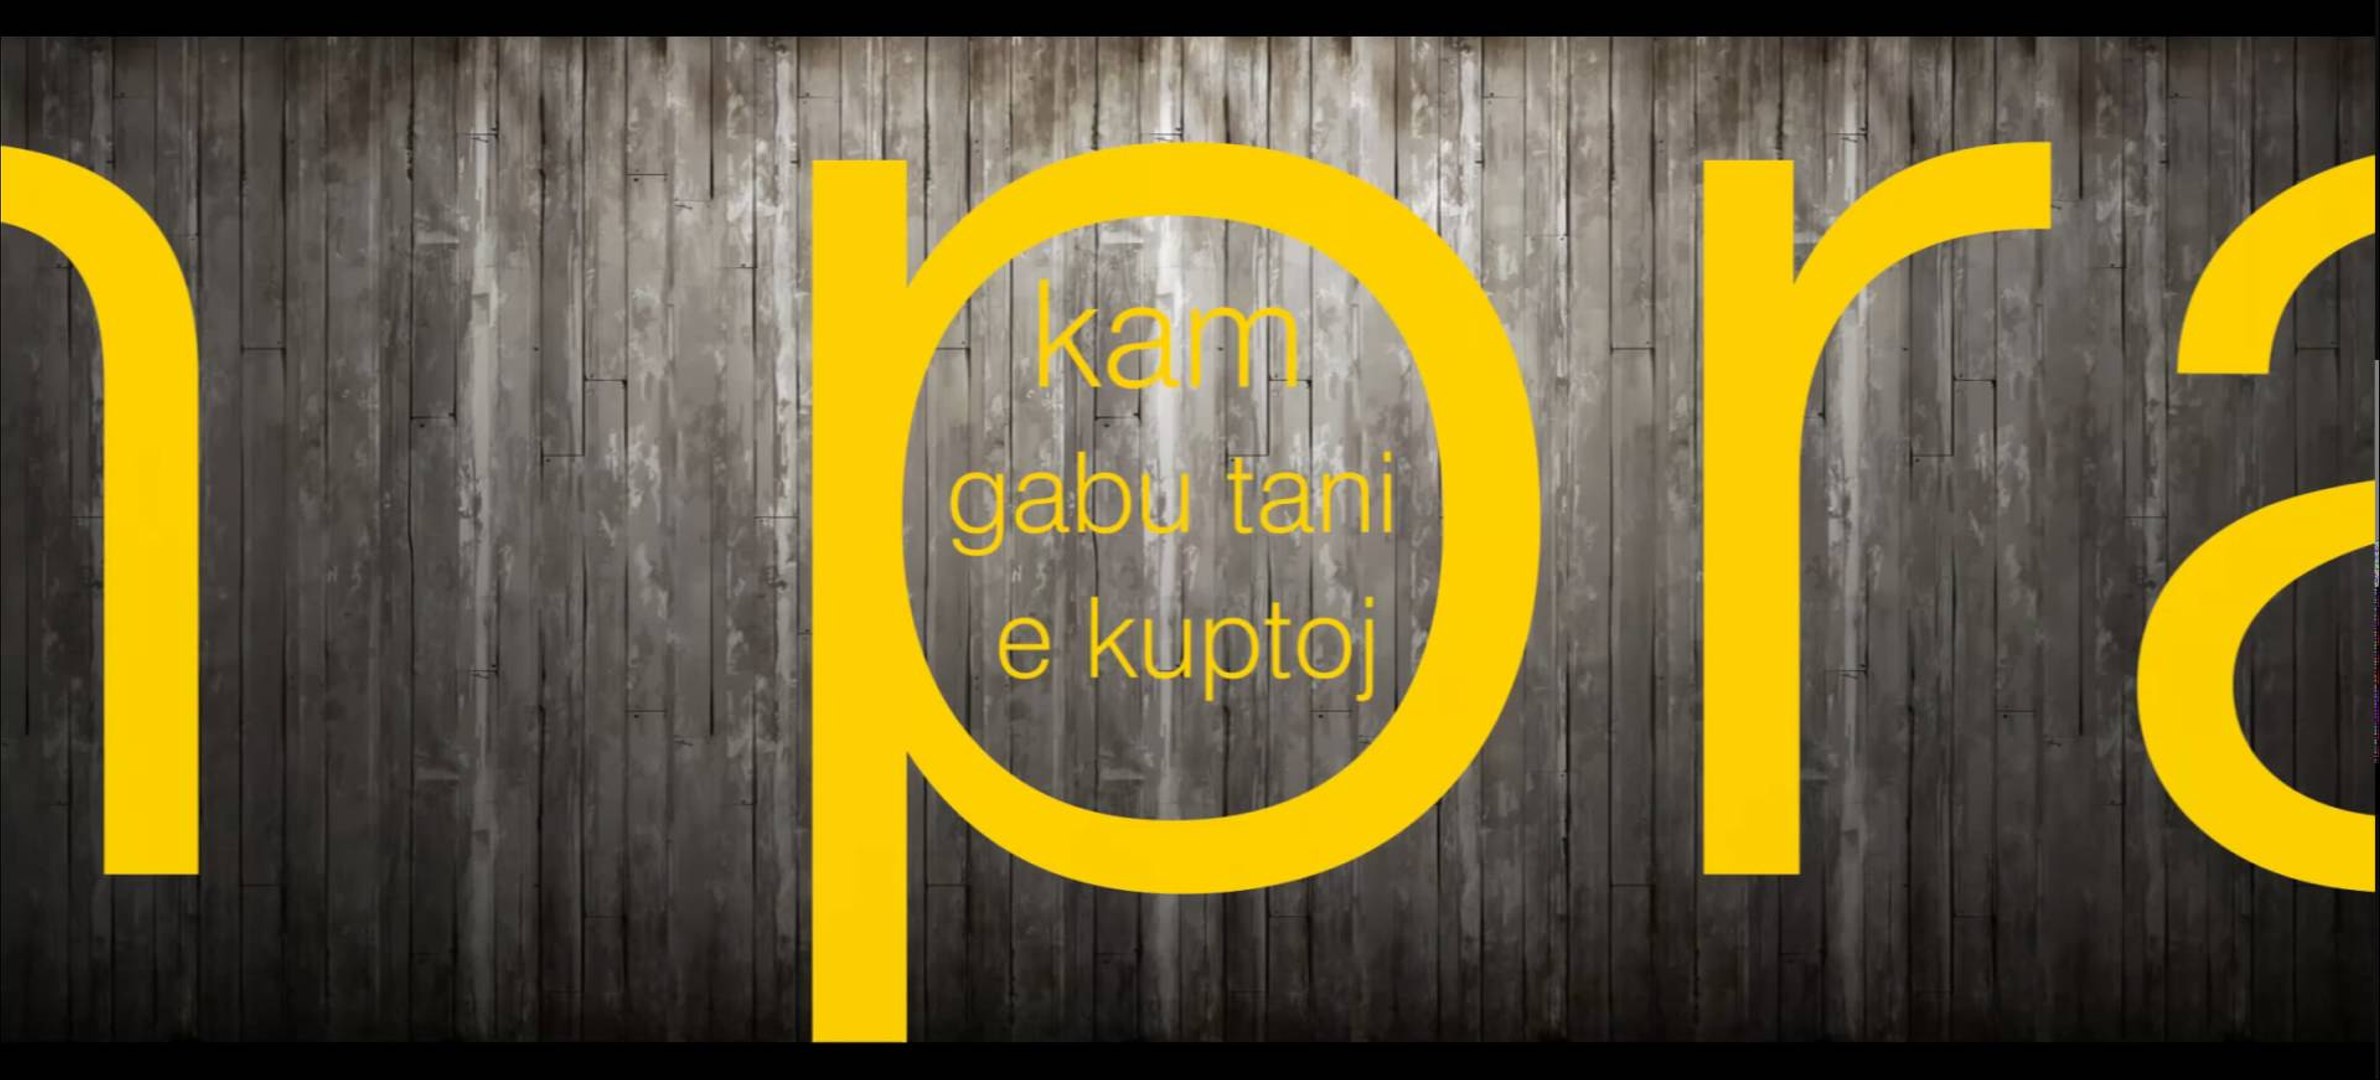 KamaLi   ft Katty -1 Shans (OfficiaL Video Lyrics HD) 2014